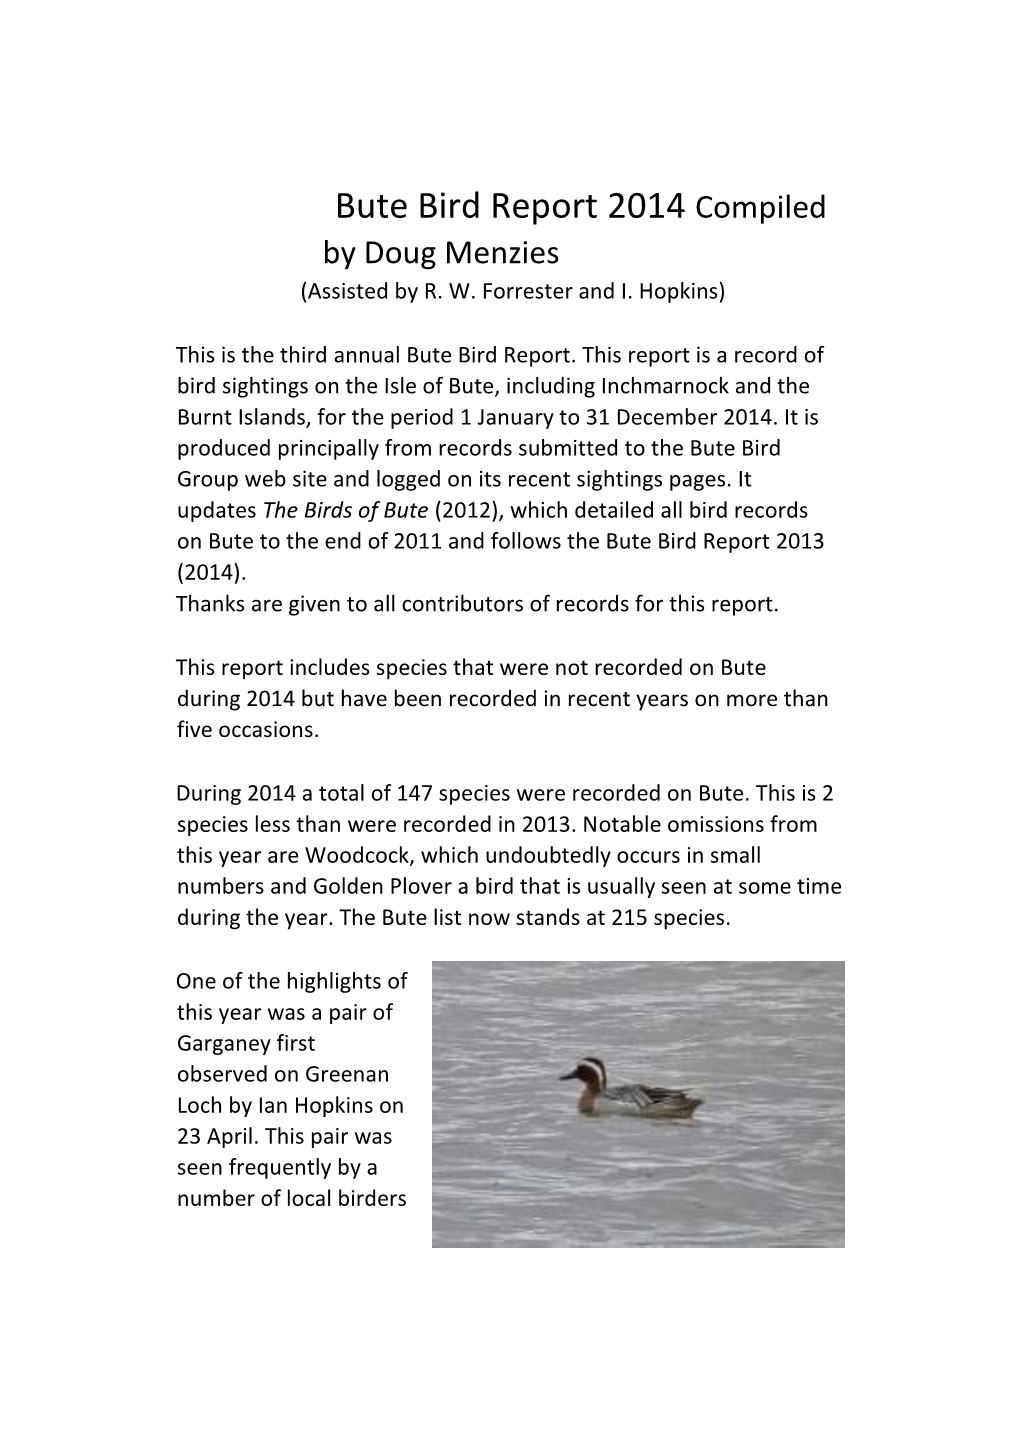 Bute Bird Report 2012